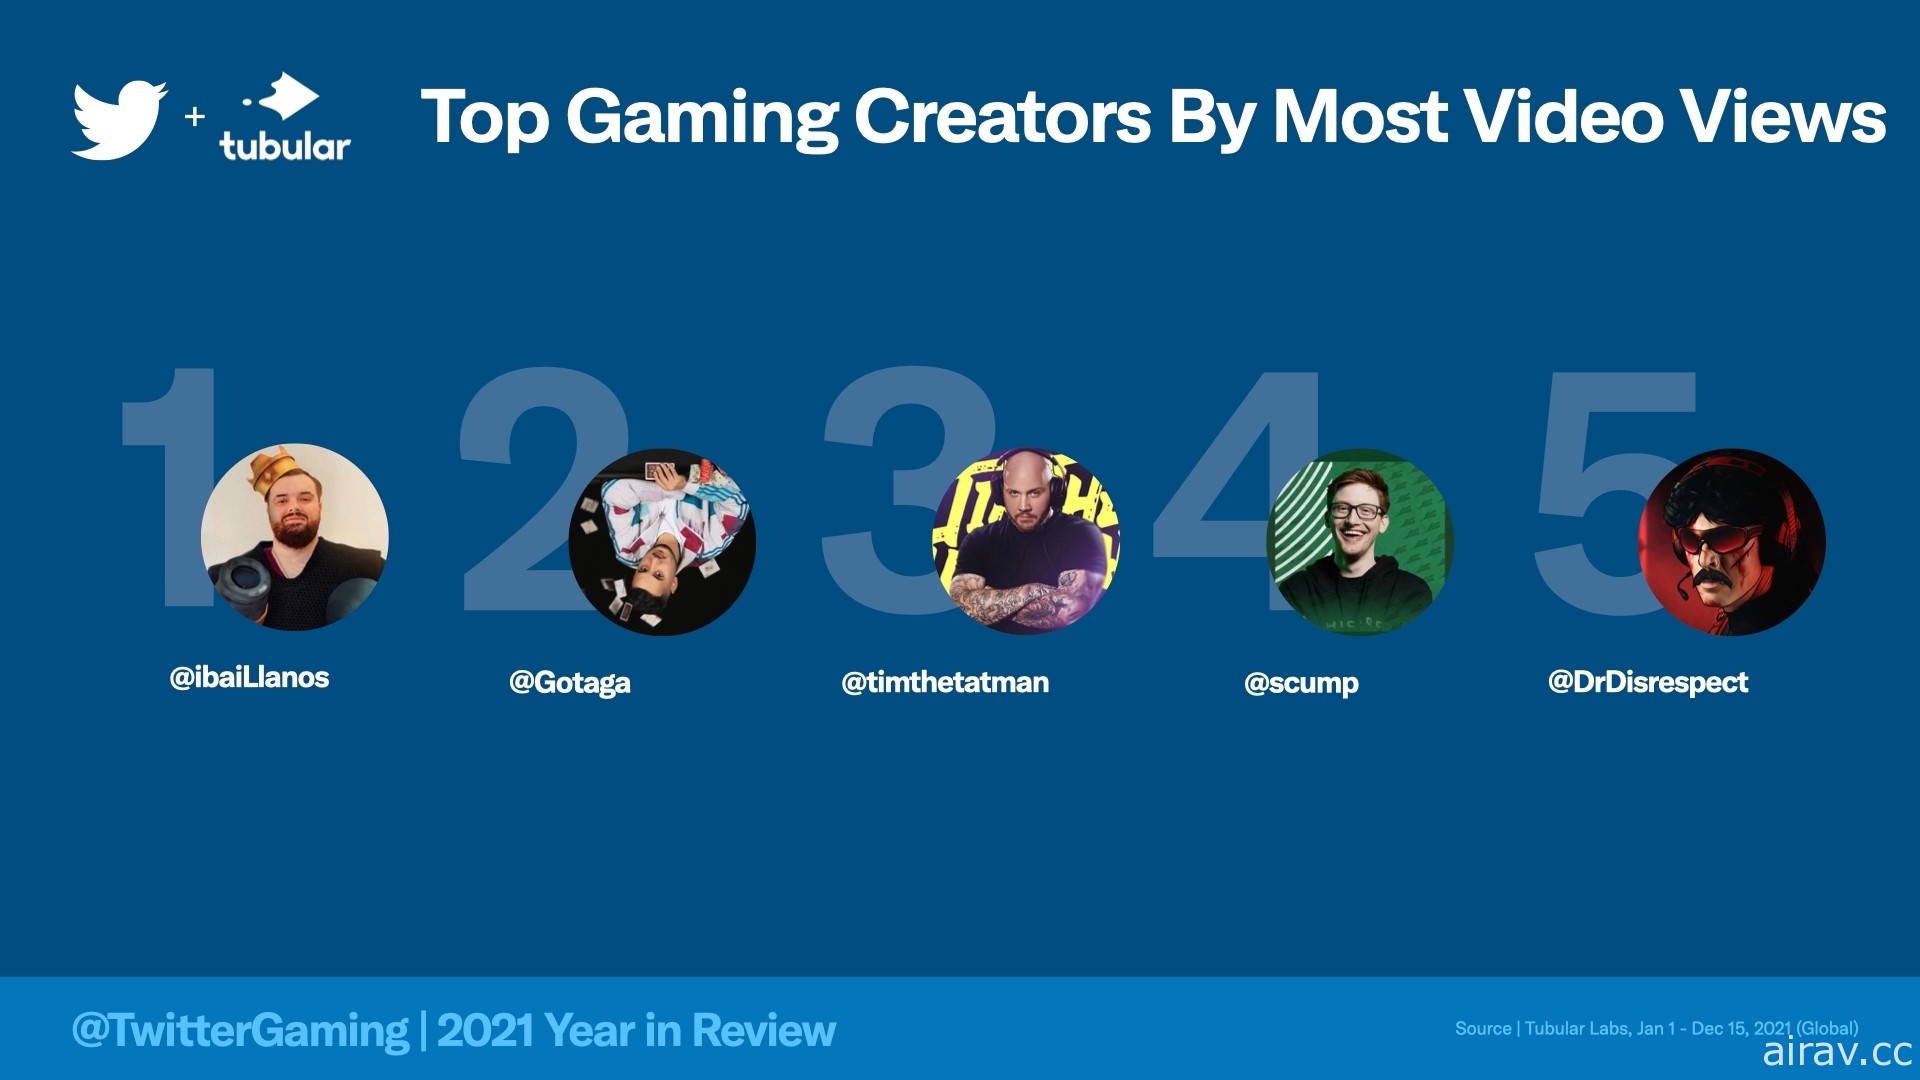 Twitter 公開 2021 年全球遊戲趨勢話題 《原神》為最多推文之遊戲